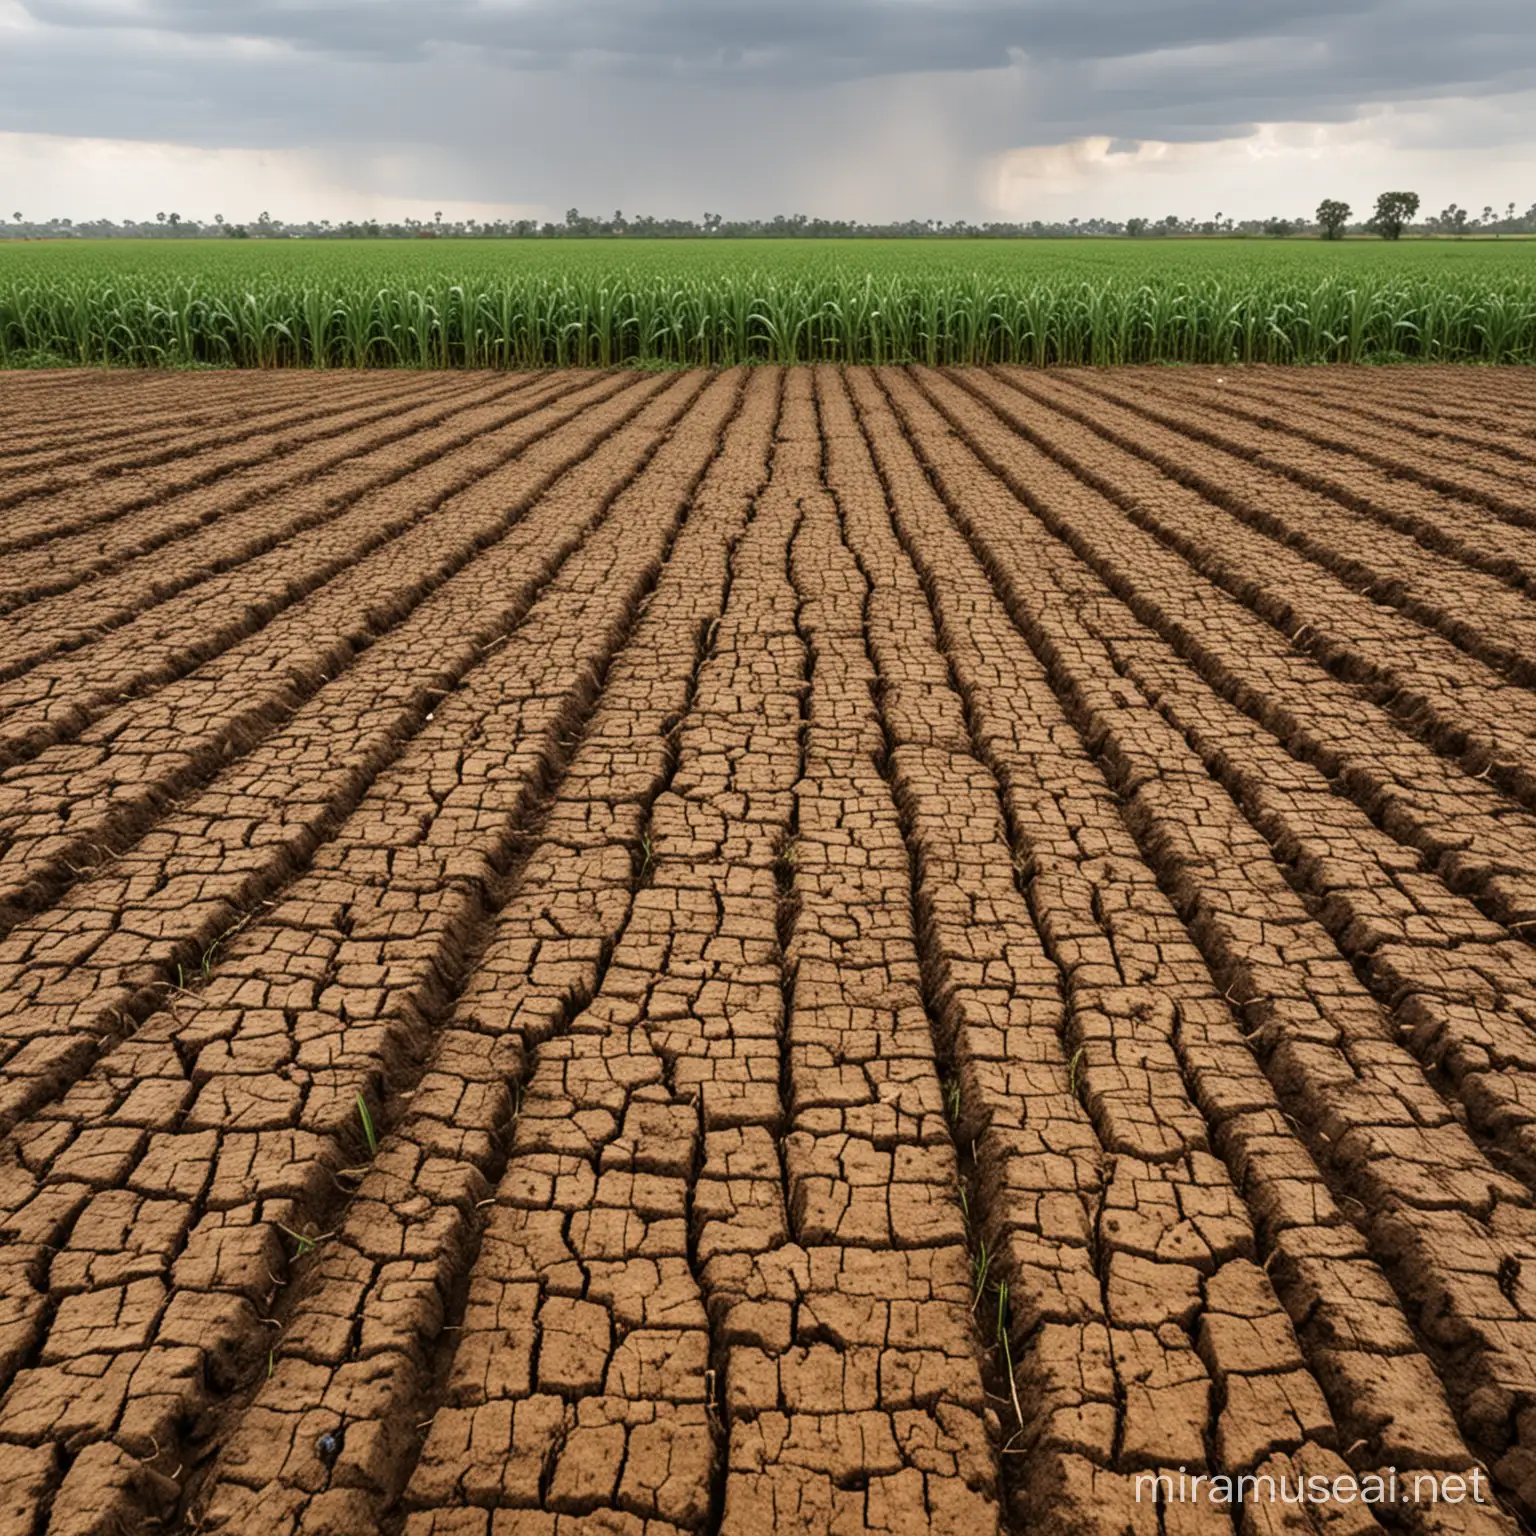 Devastation of Agricultural Crops by Climate Change